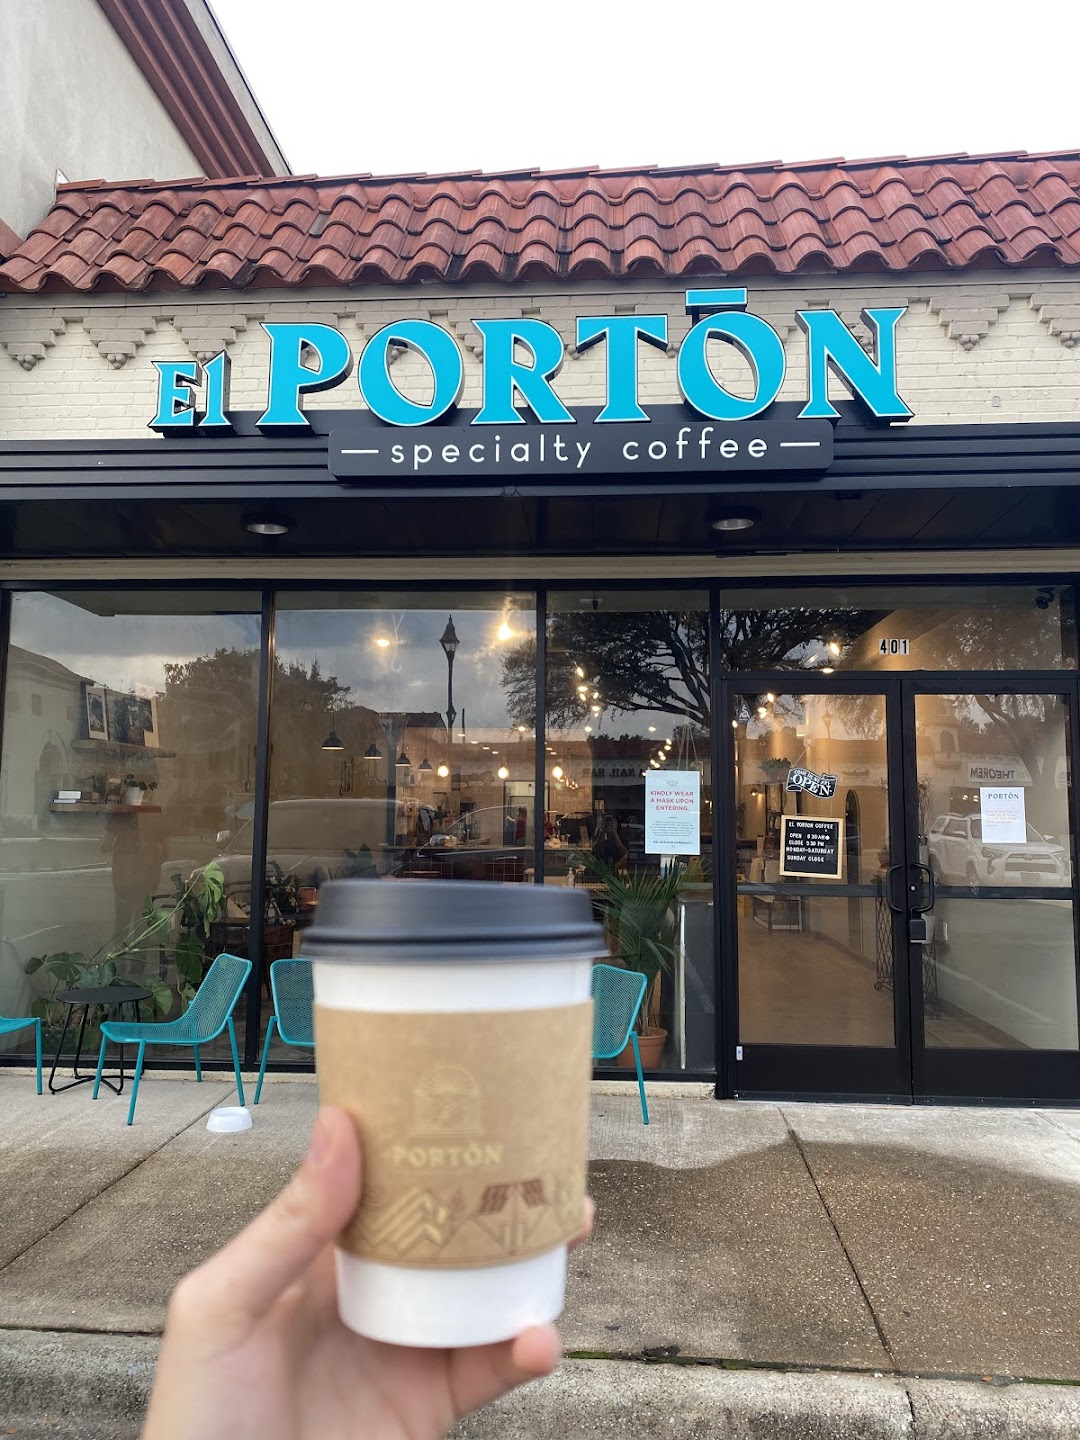 El Porton Coffee